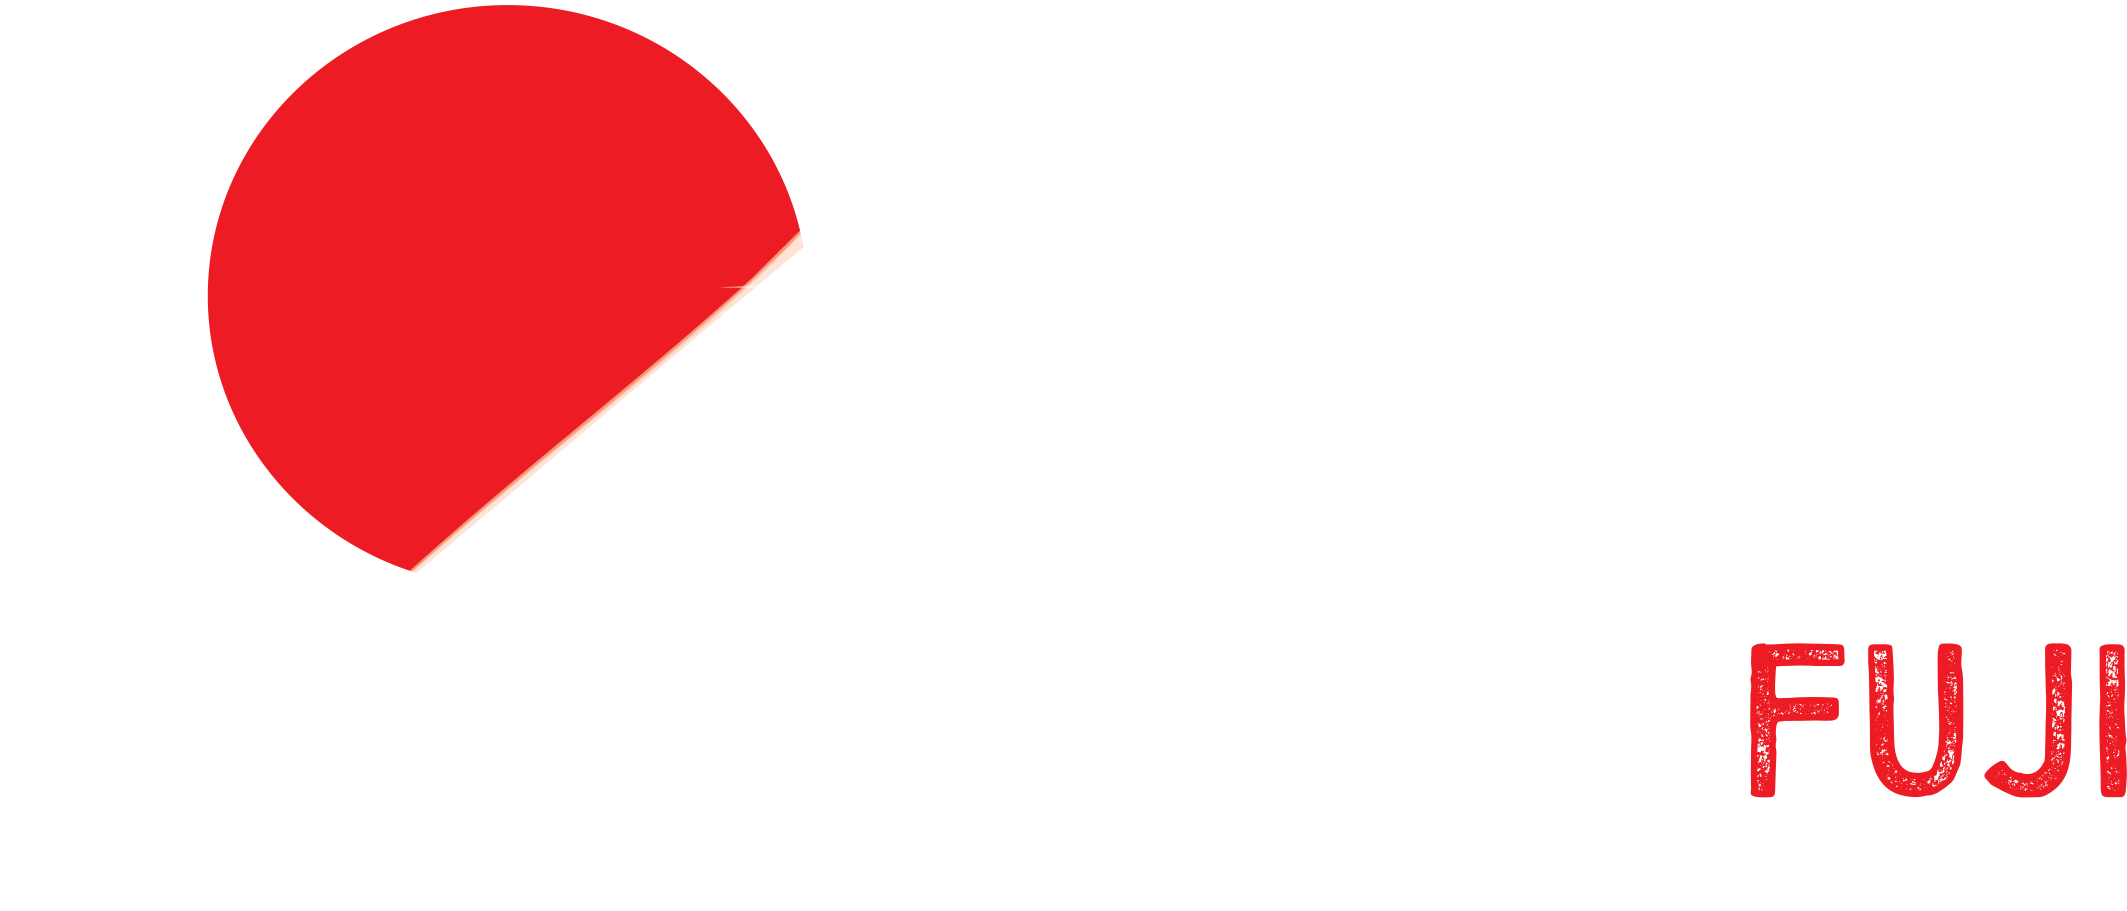 Judo Team Fuji